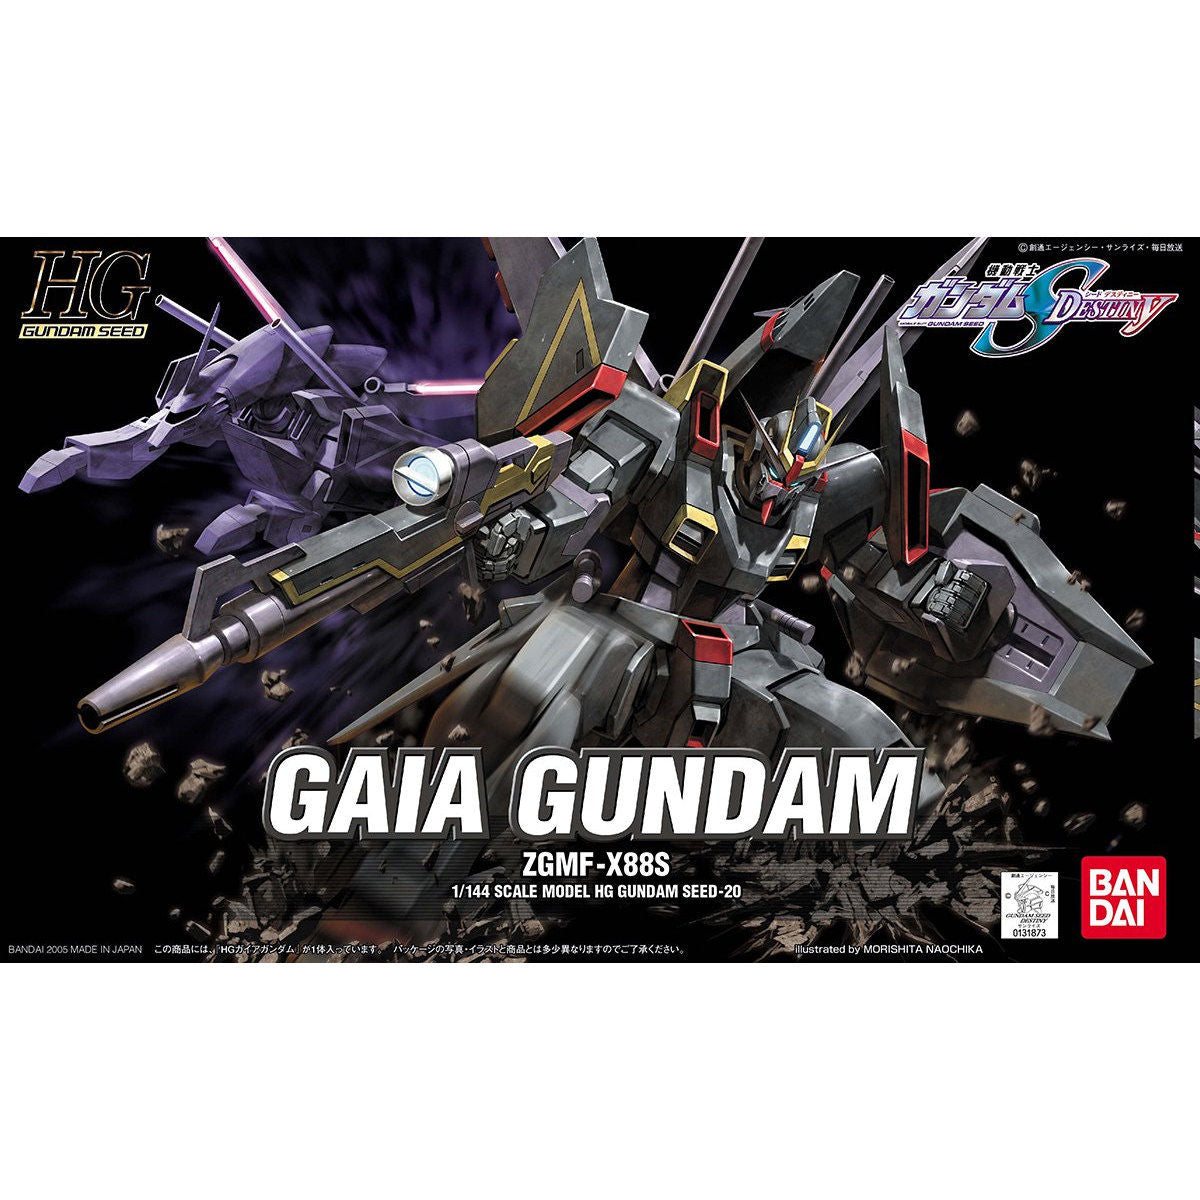 HG 1/144 SEED #20 ZGMF-X88S Gaia Gundam #0131873 by Bandai